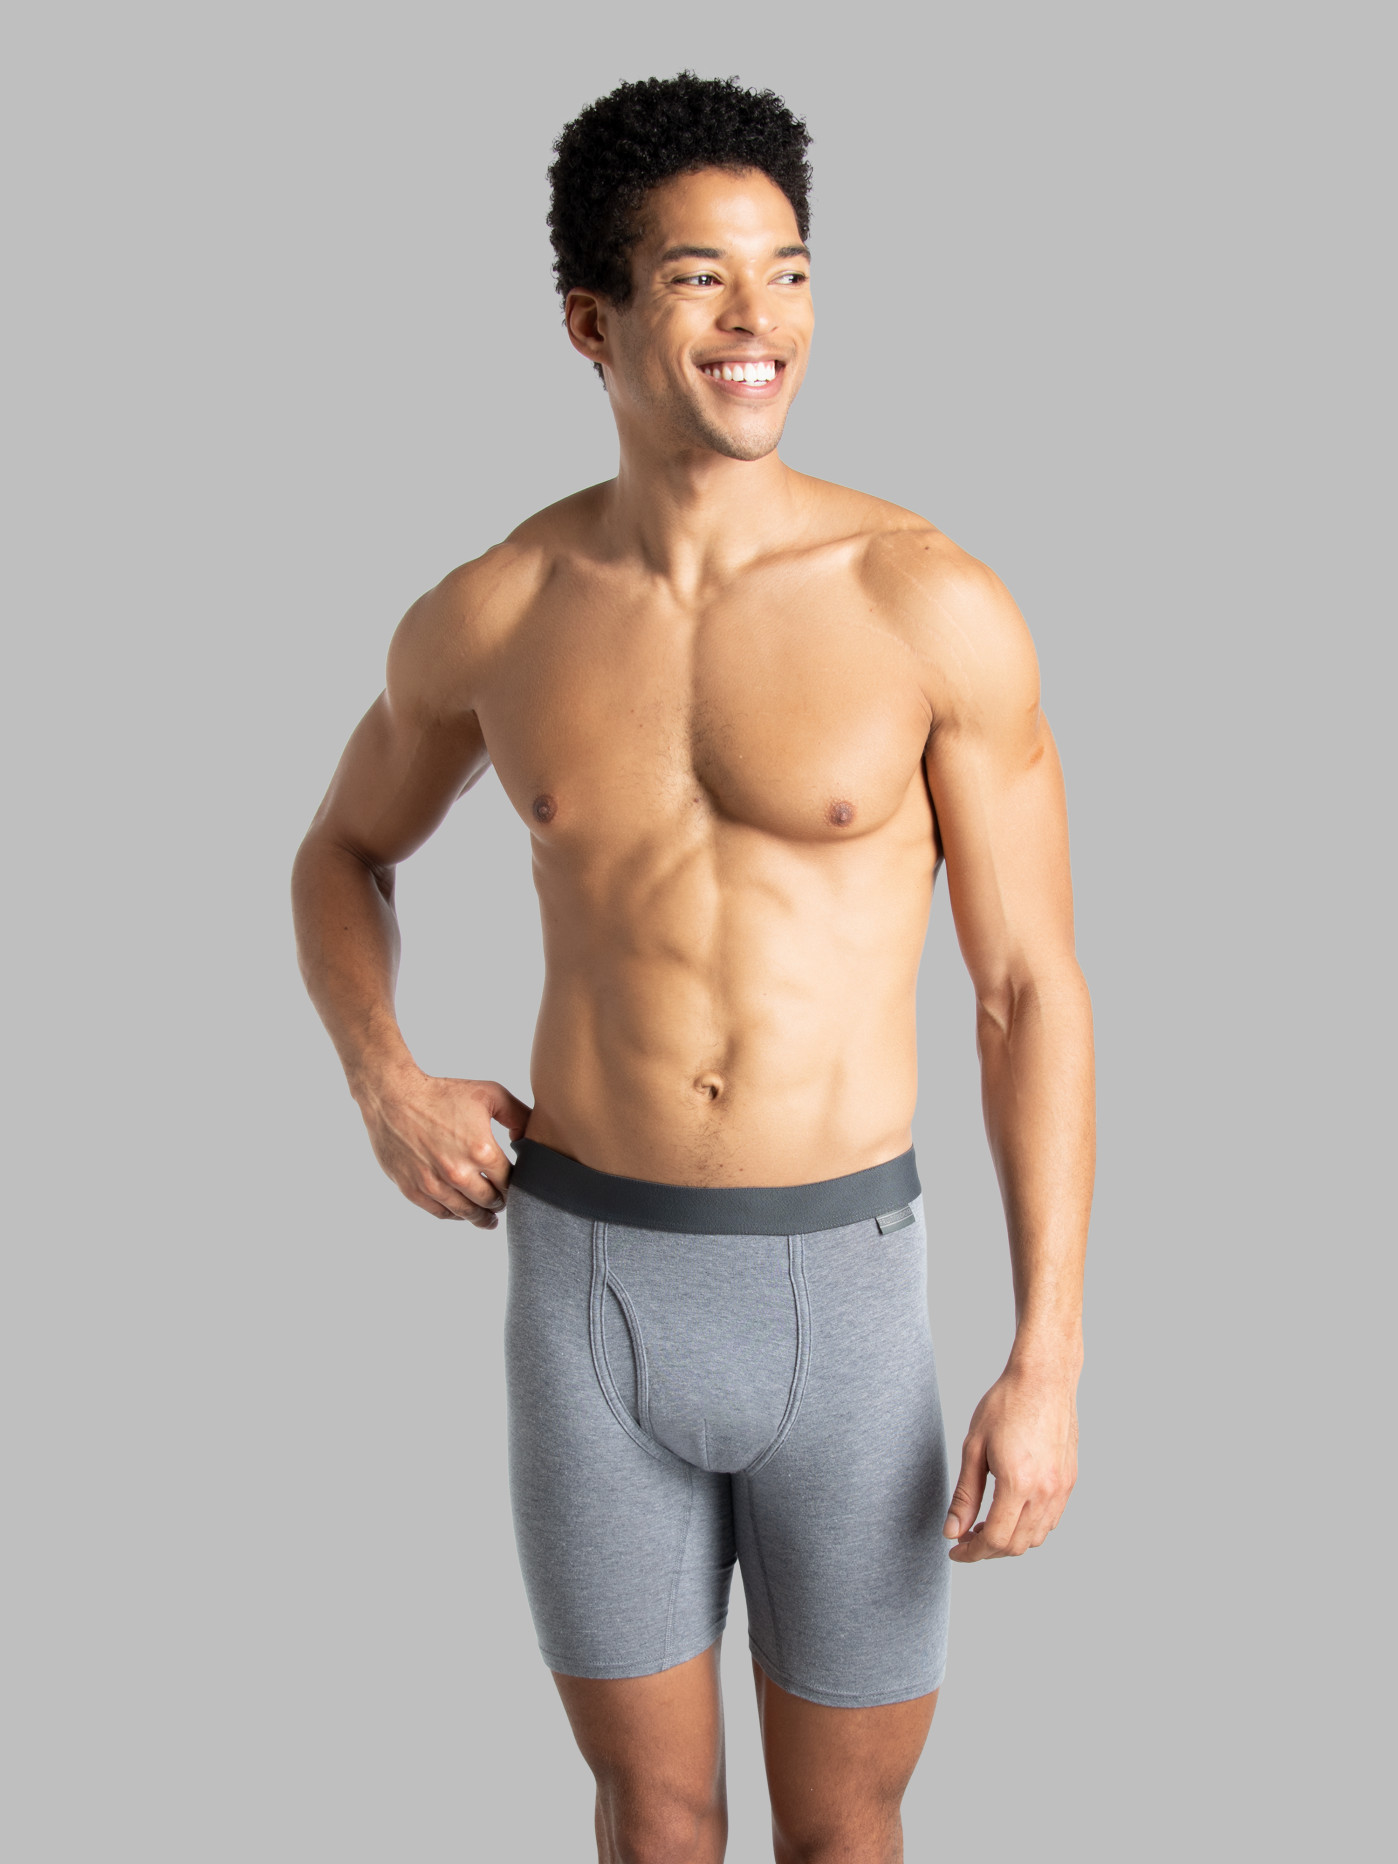 Members Mark Underwear - Stretch Boxer Briefs (5 Pack), Black